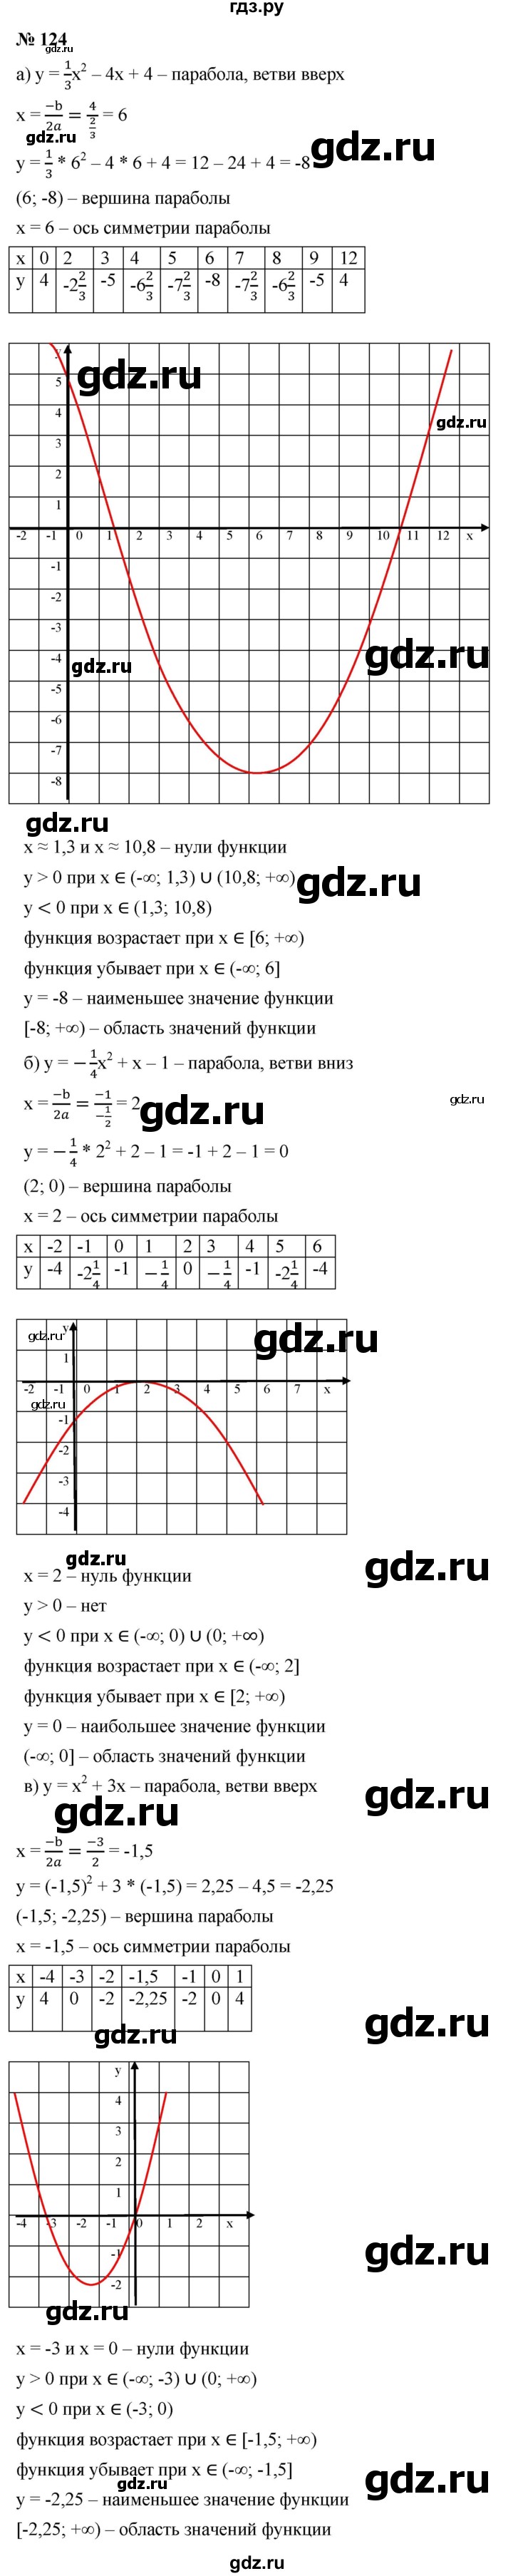 ГДЗ Задание 124 Алгебра 9 Класс Макарычев, Миндюк